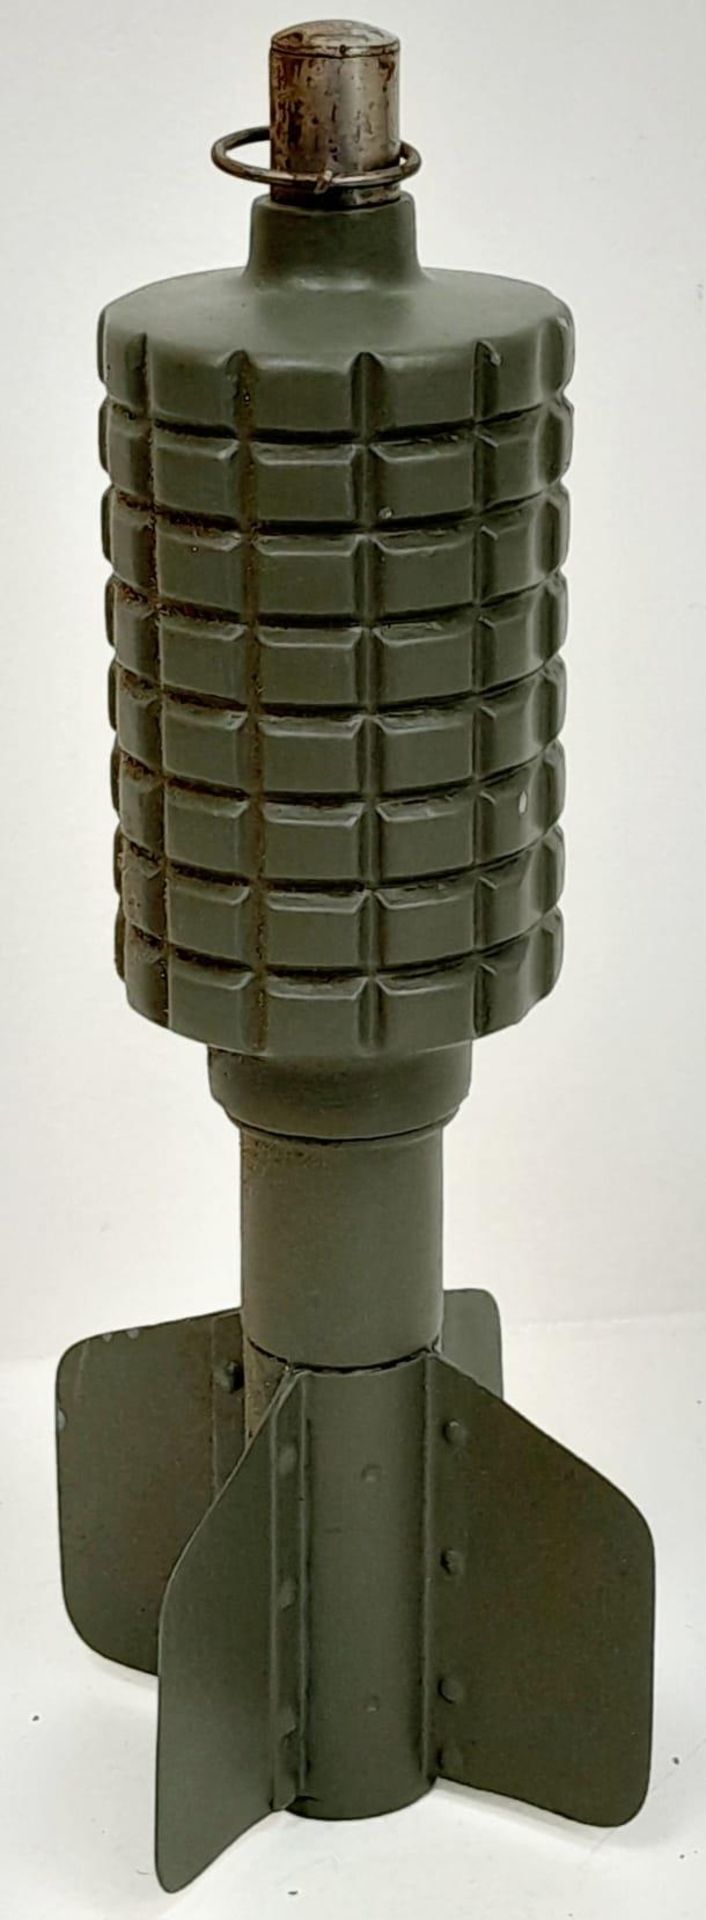 INERT WW1 German Museum Quality Restored Granatenwerfer Spigot Mortar Round. UK Mainland Sales Only. - Image 3 of 3